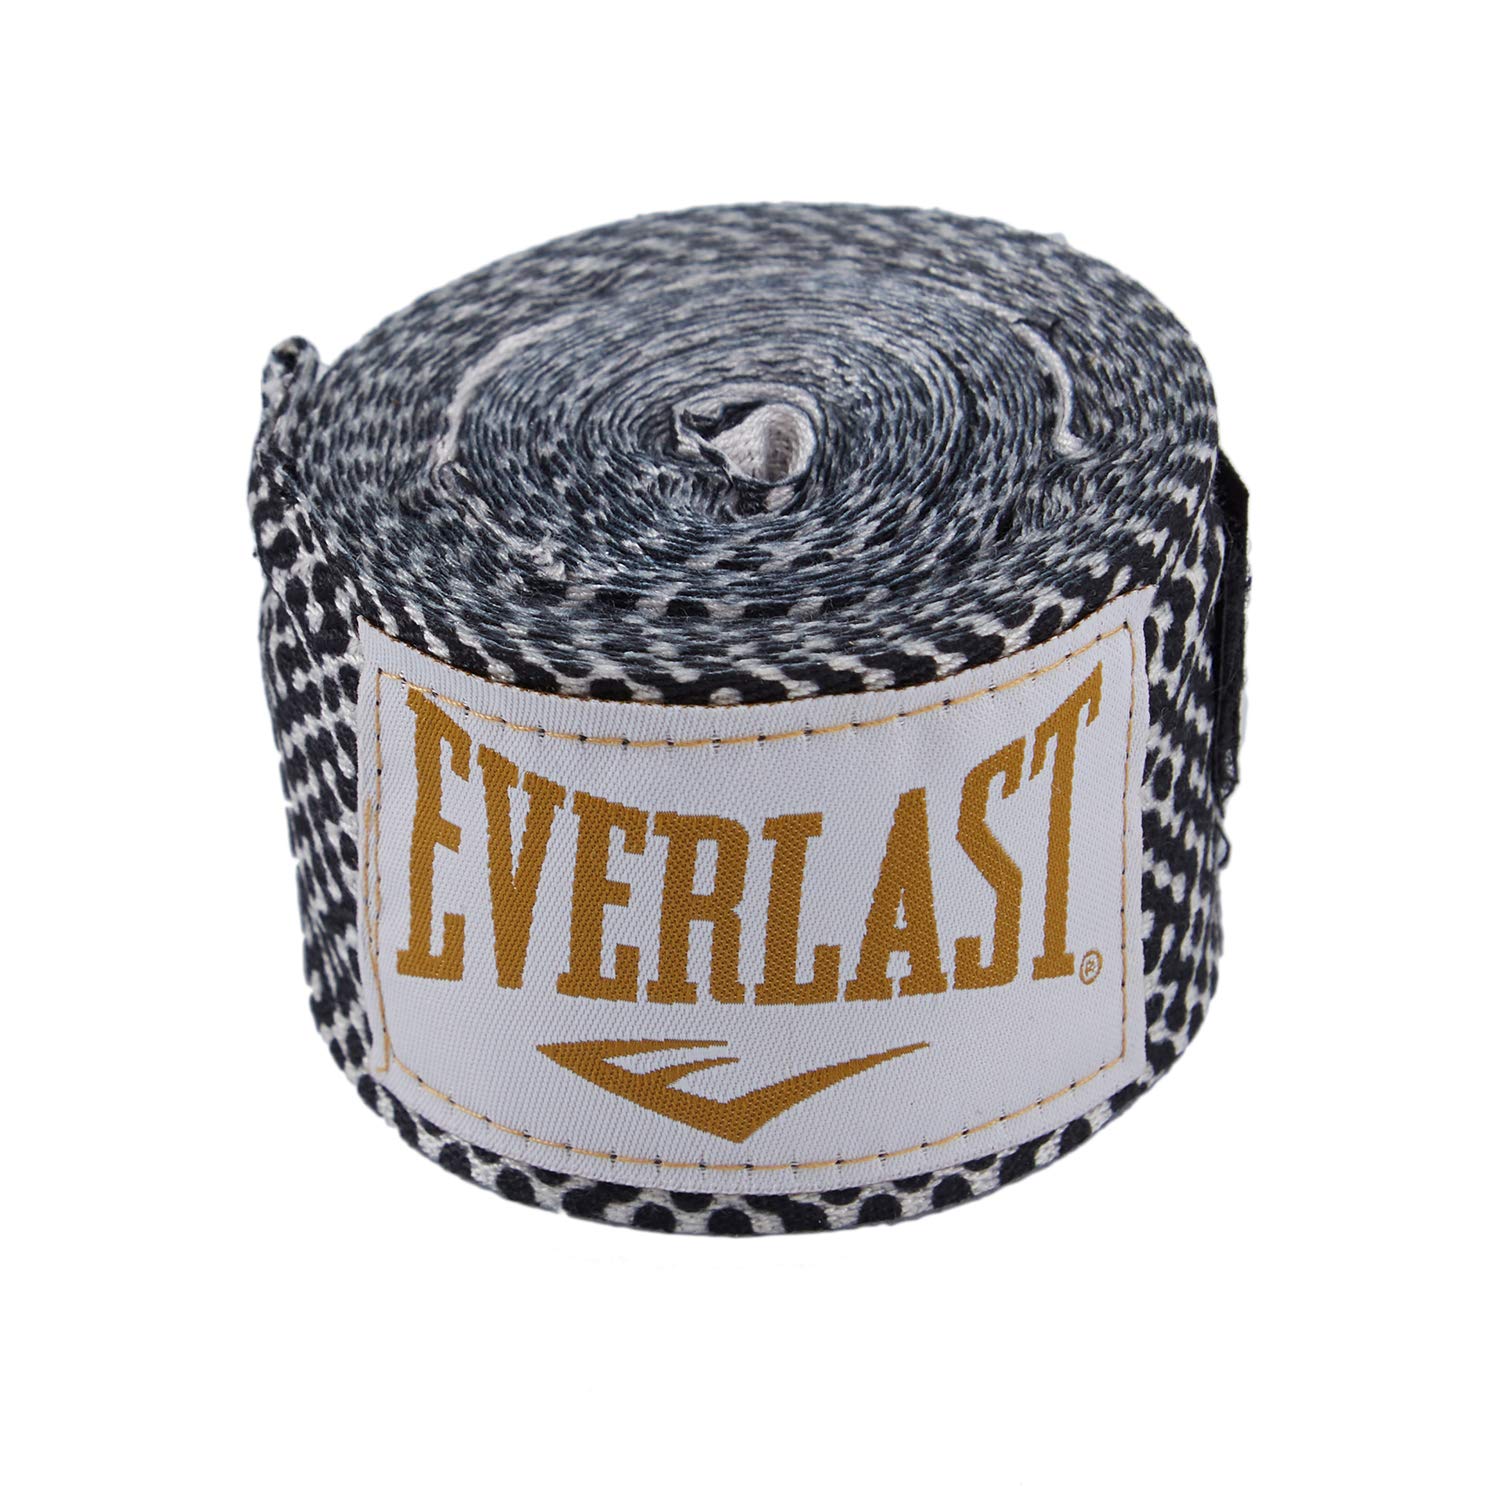 Everlast P00000734 Boxing Hand Wrap, 120-inch - Best Price online Prokicksports.com